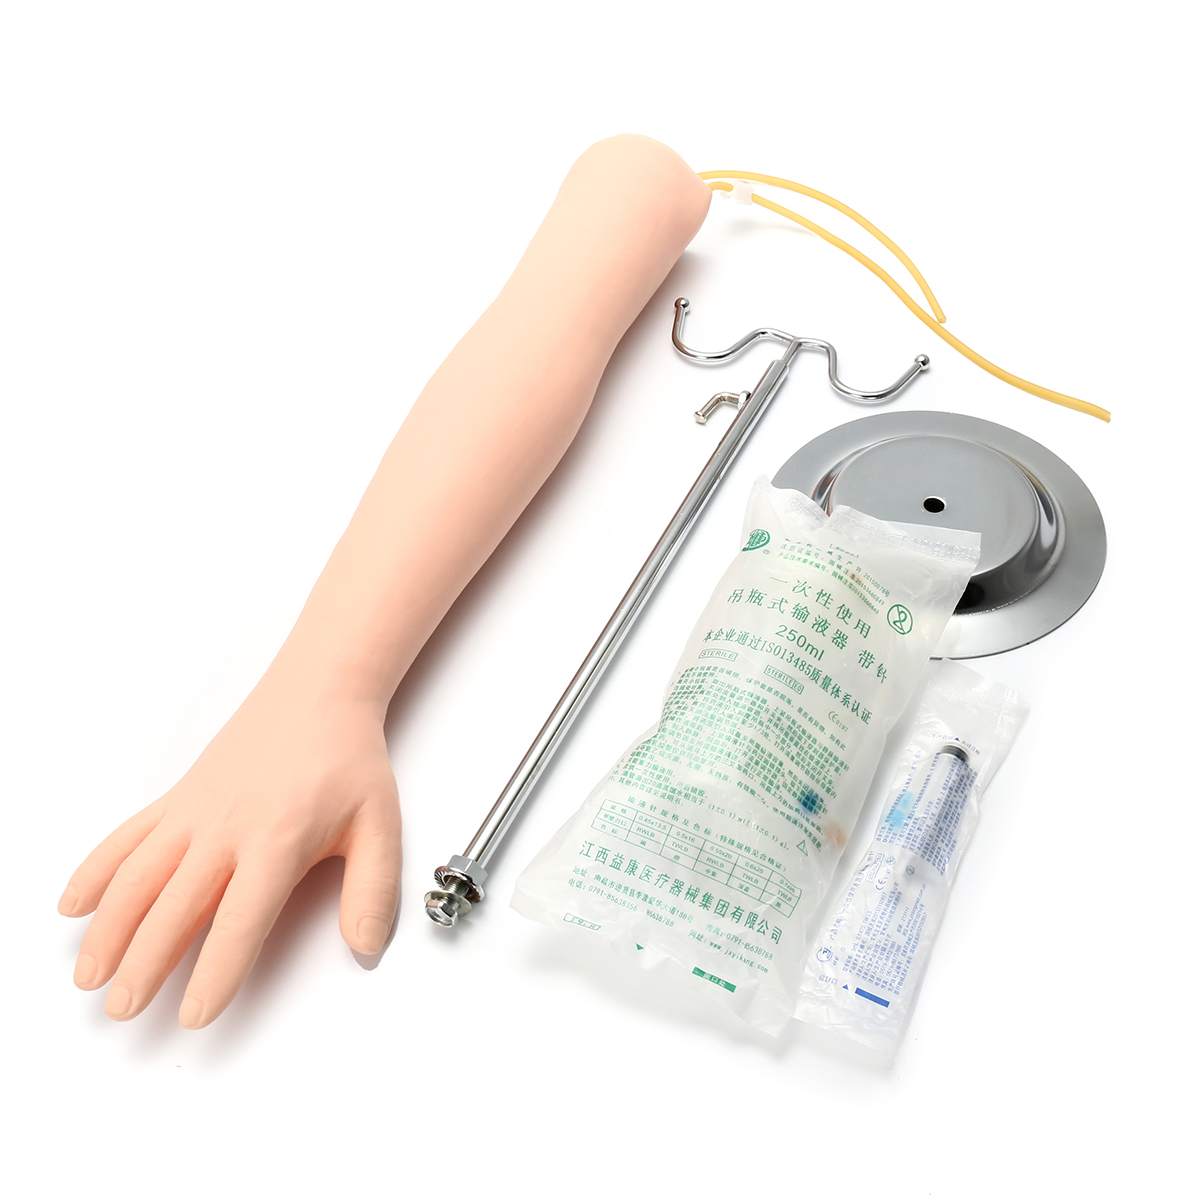 IV Practice Arm Injection Simulation Kit